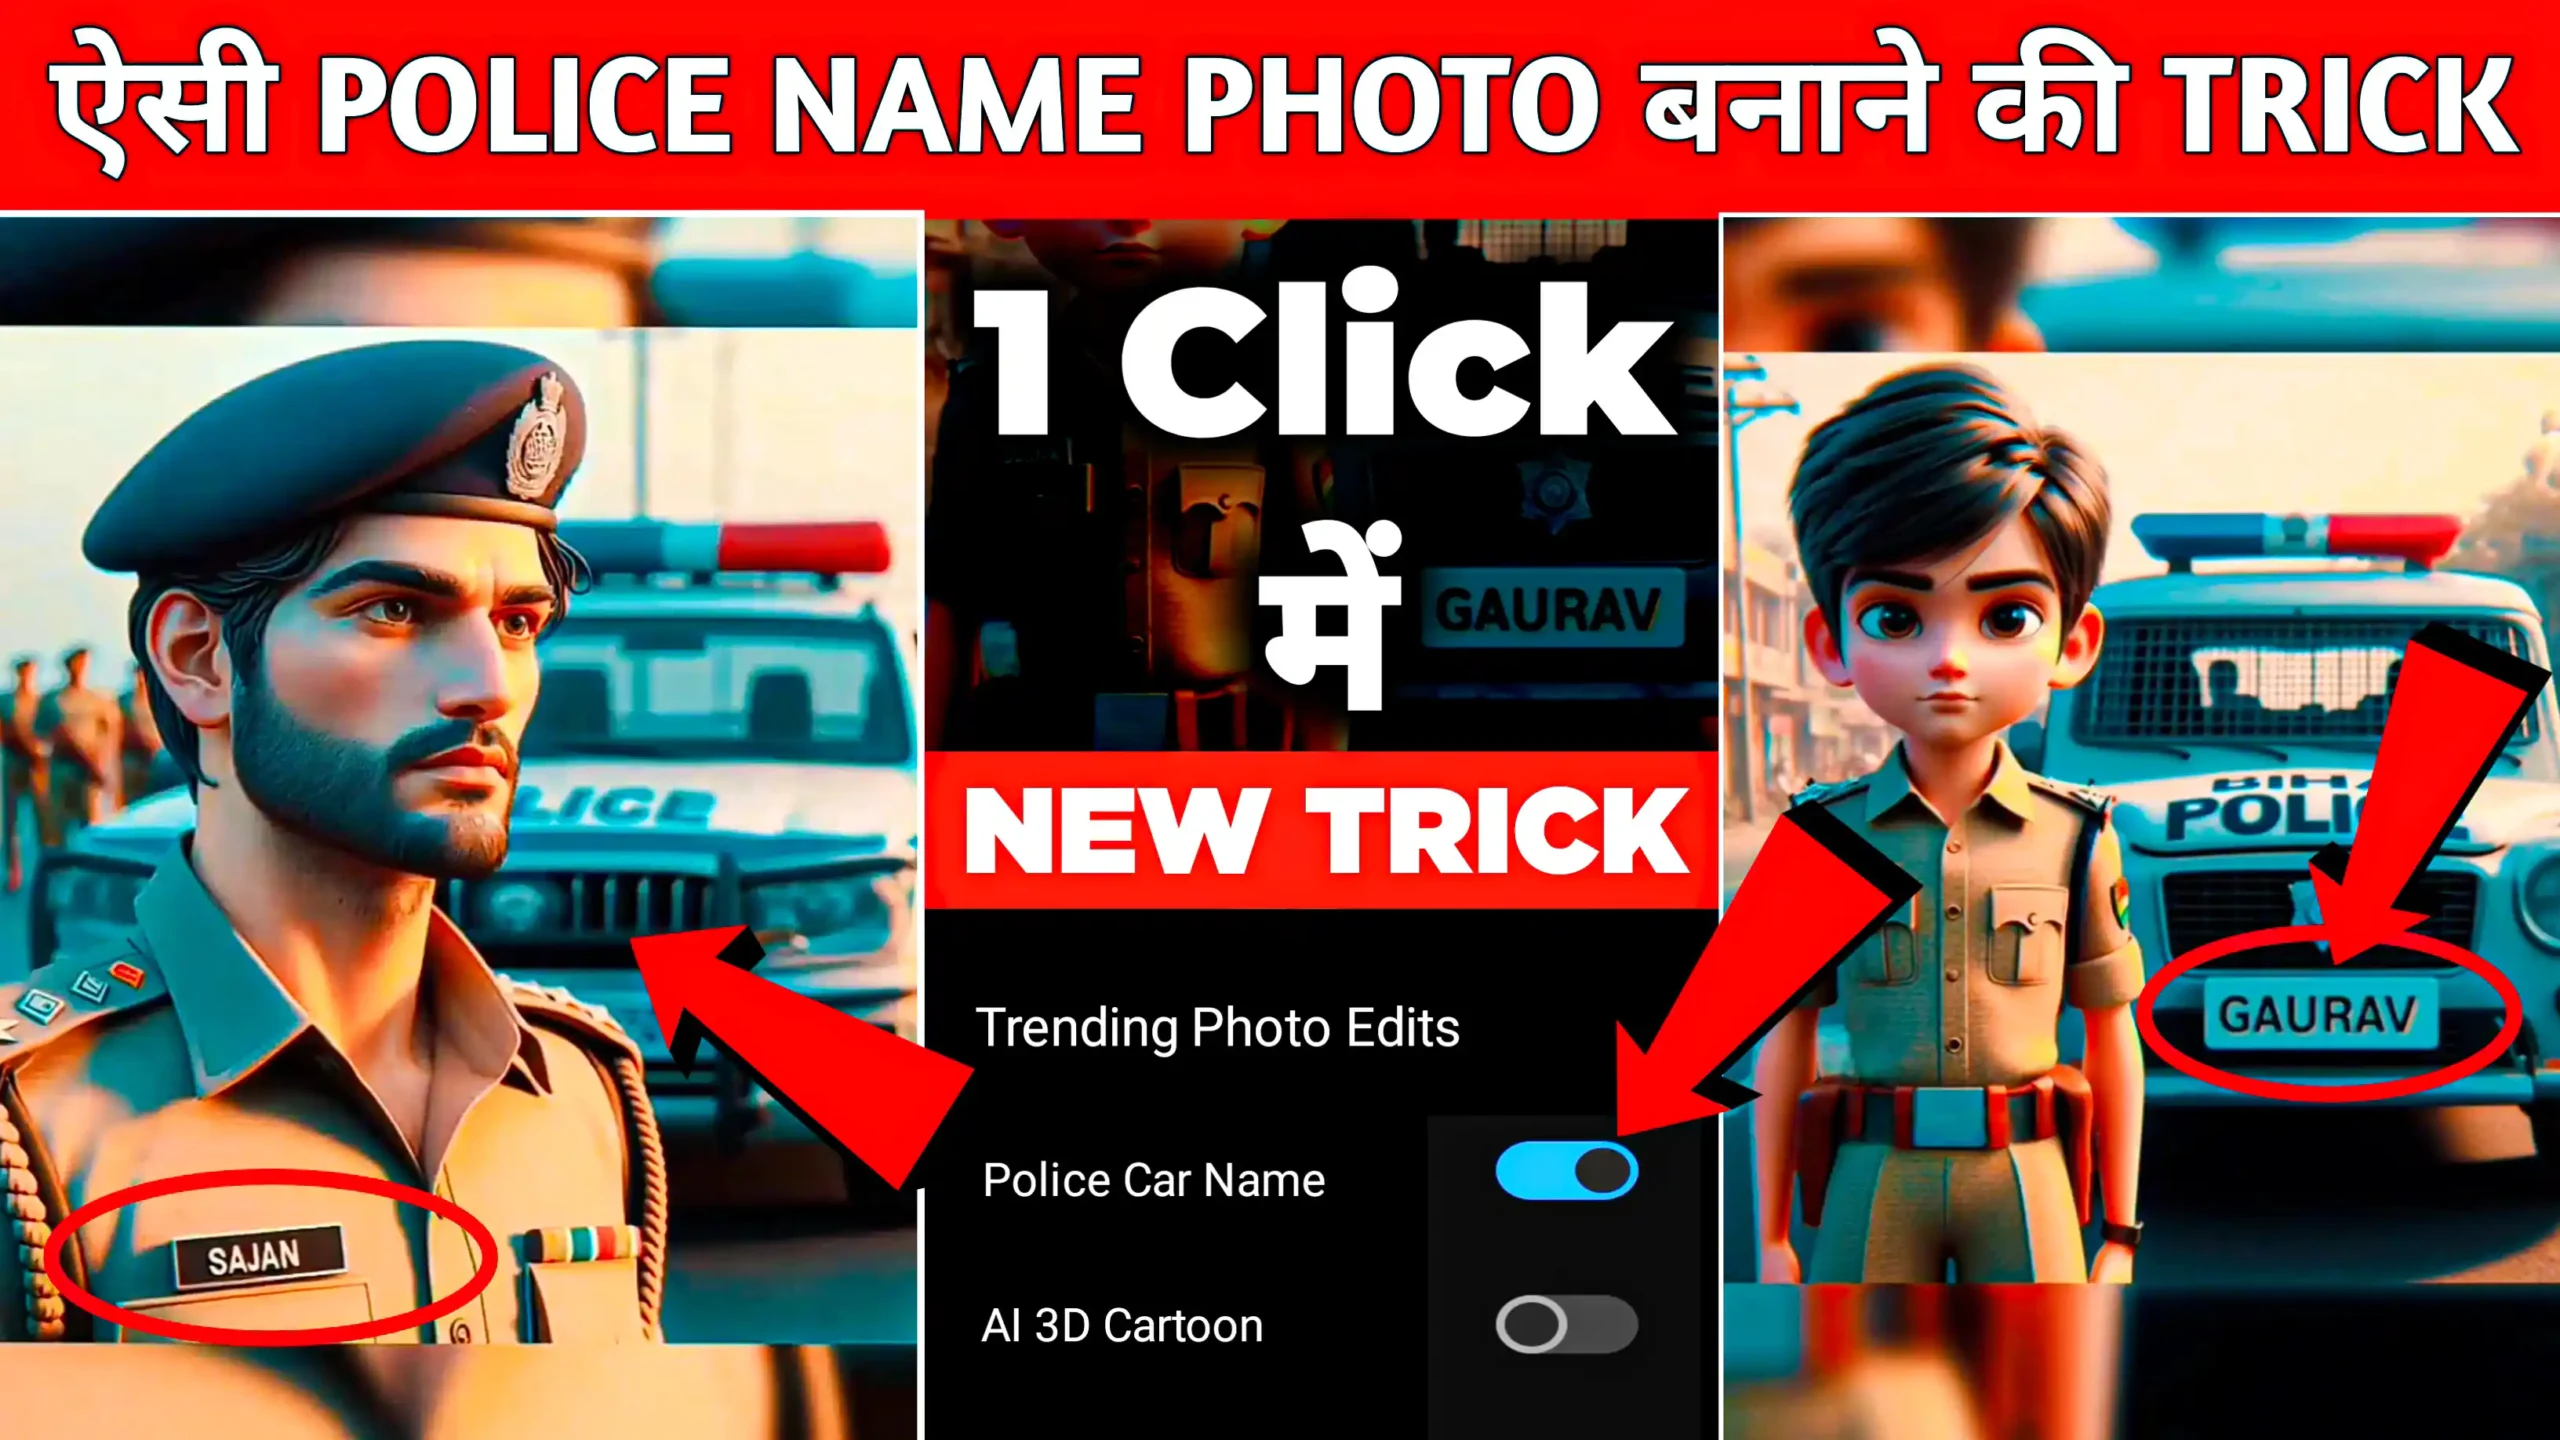 Bing AI Police Name Image Generator